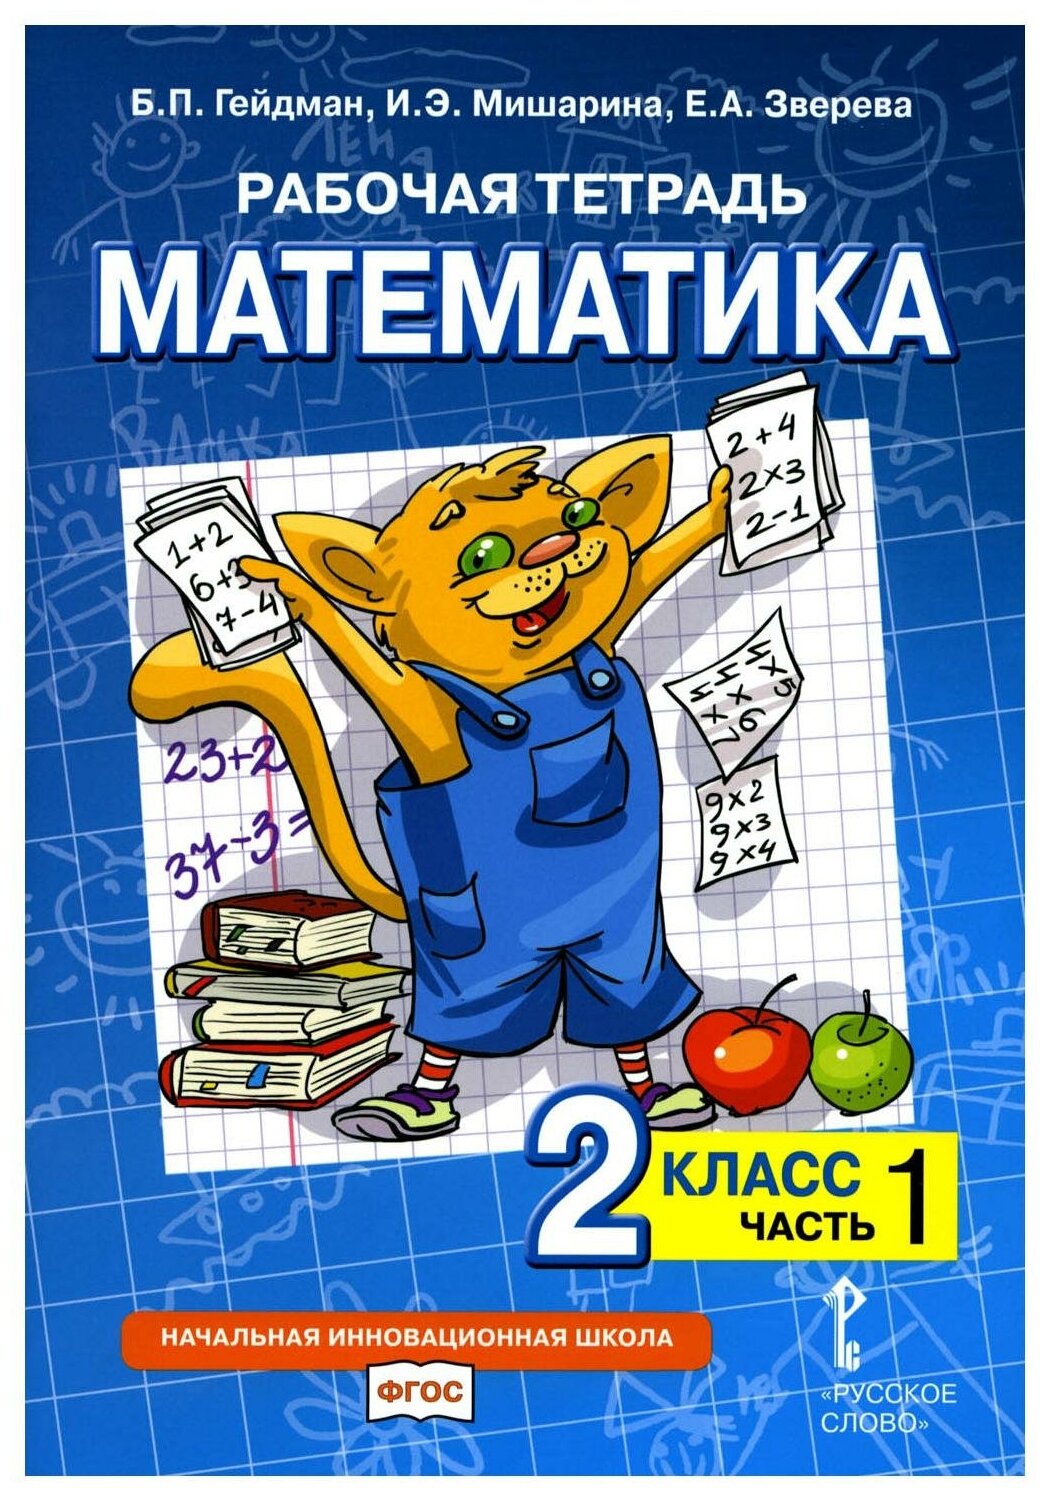 Рабочая тетрадь. Математика. 2 кл. В 4 ч. Ч. 1. 2-е изд